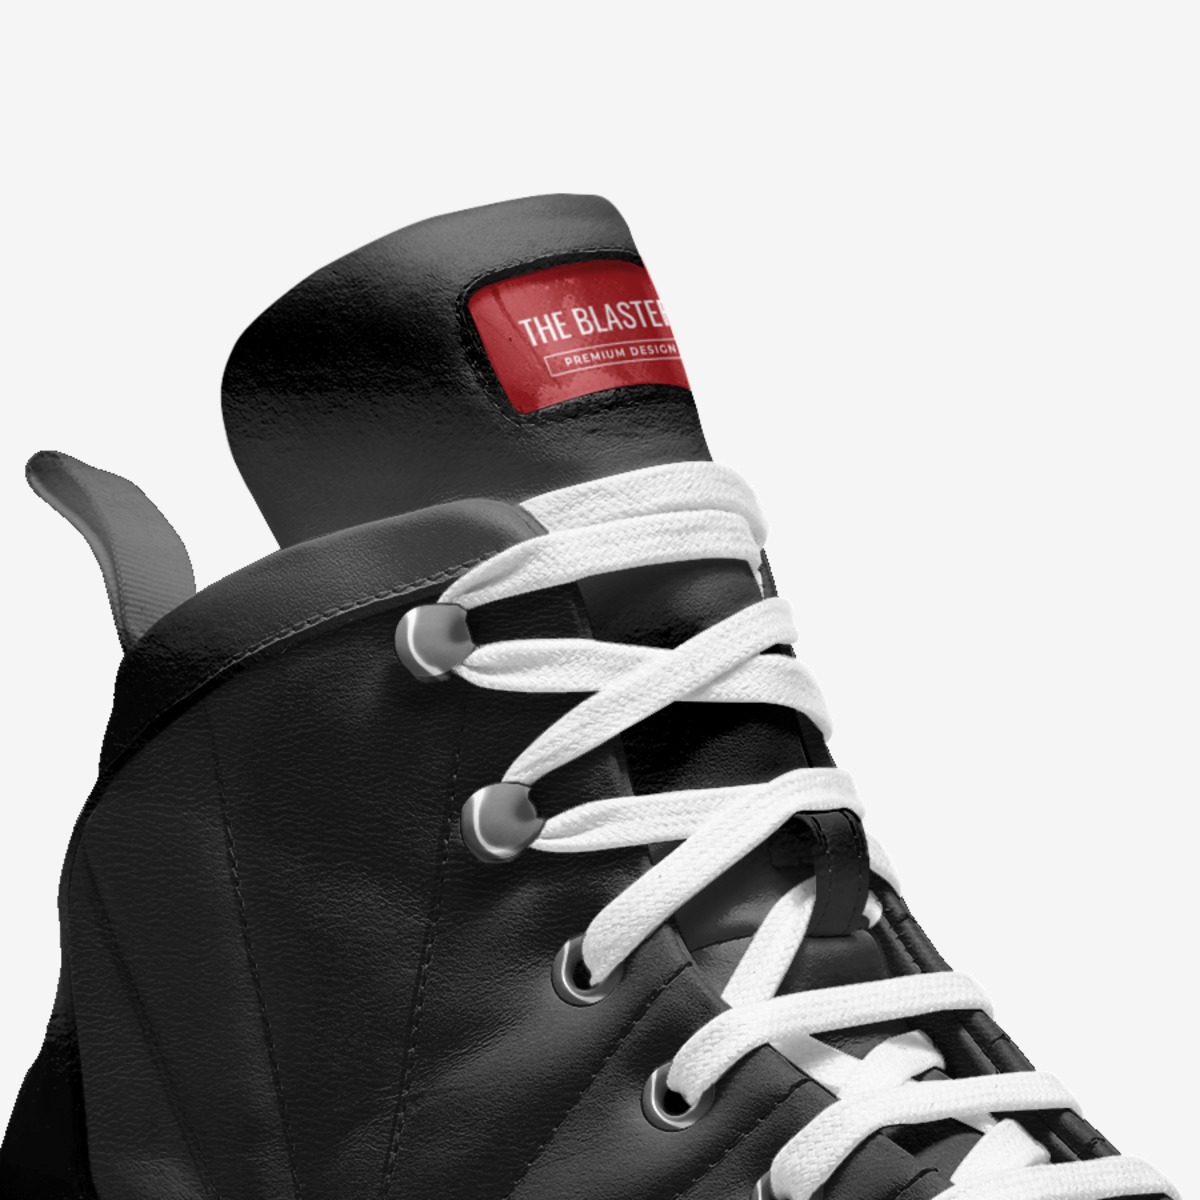 dsdsdsd | A Custom Shoe concept by Aliveshoes Team